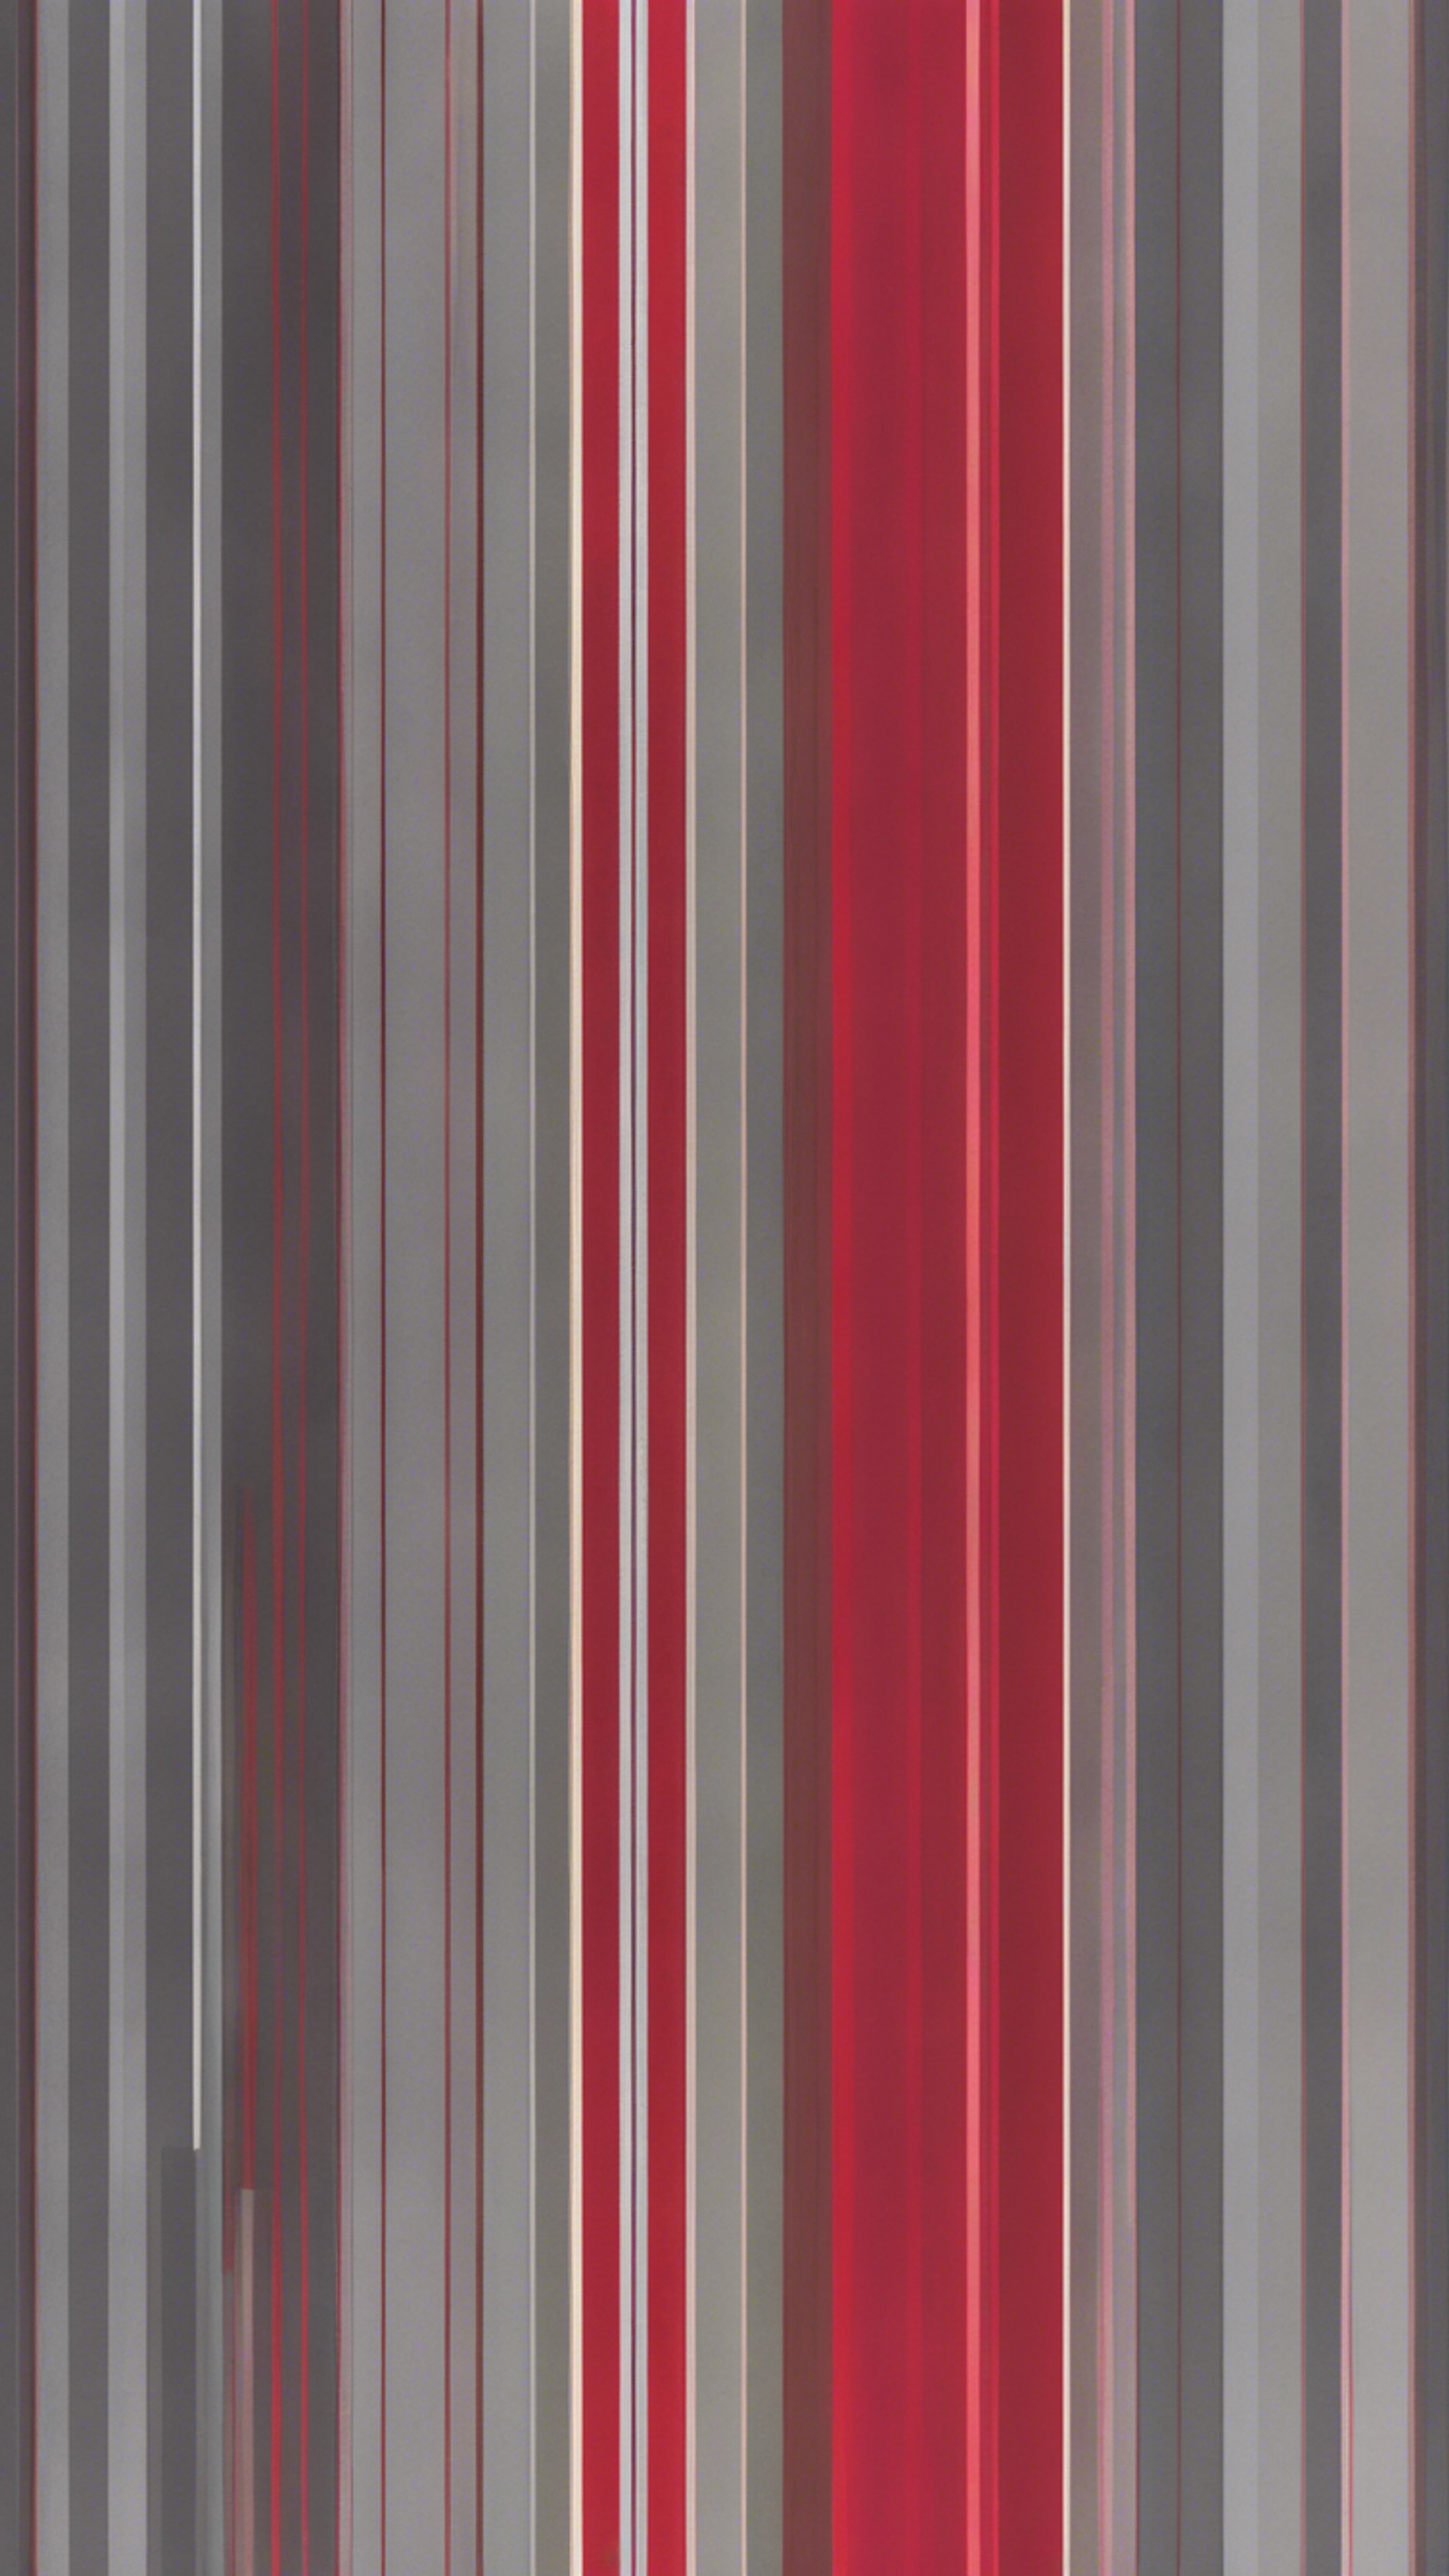 Pattern inspired by modern art, showcasing alternating bands of red and grey in a gradient arrangement. Fondo de pantalla[fecd92d91f0c4817b510]